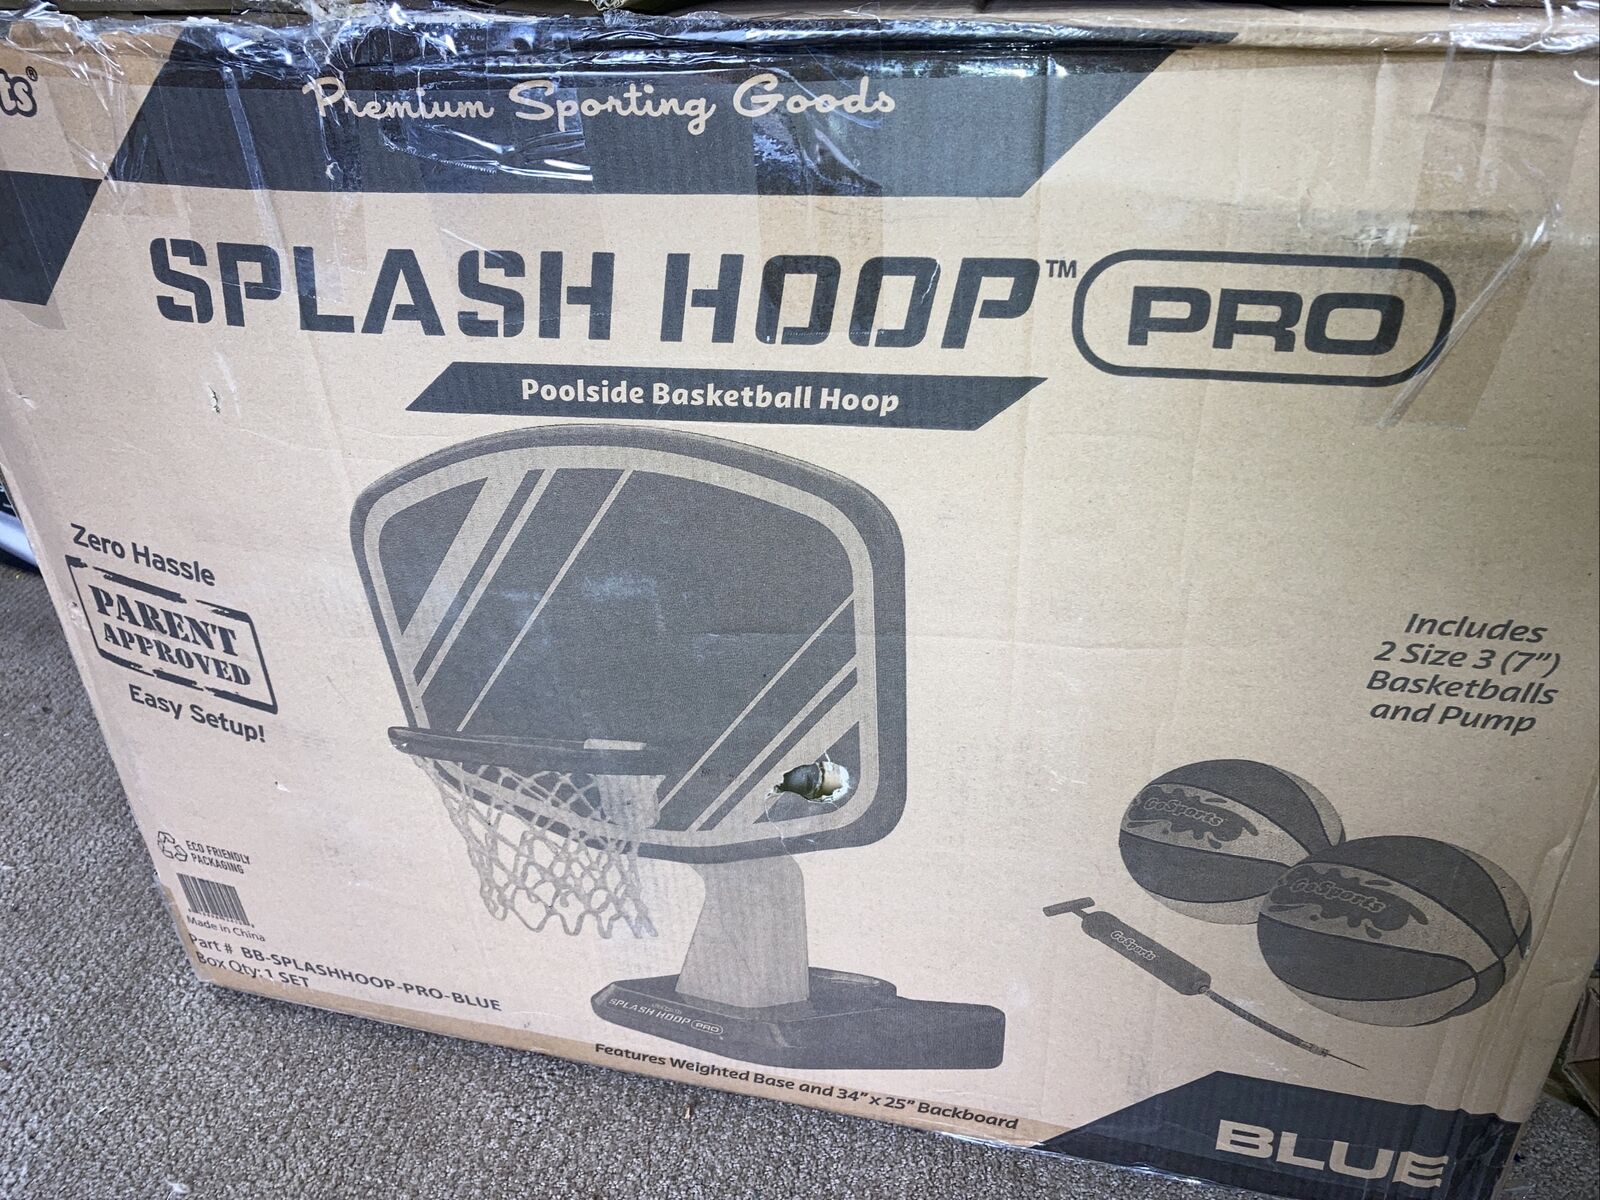 HOT - GoSports Splash Hoop PRO Swimming Pool Basketball Game, Includes Poolside